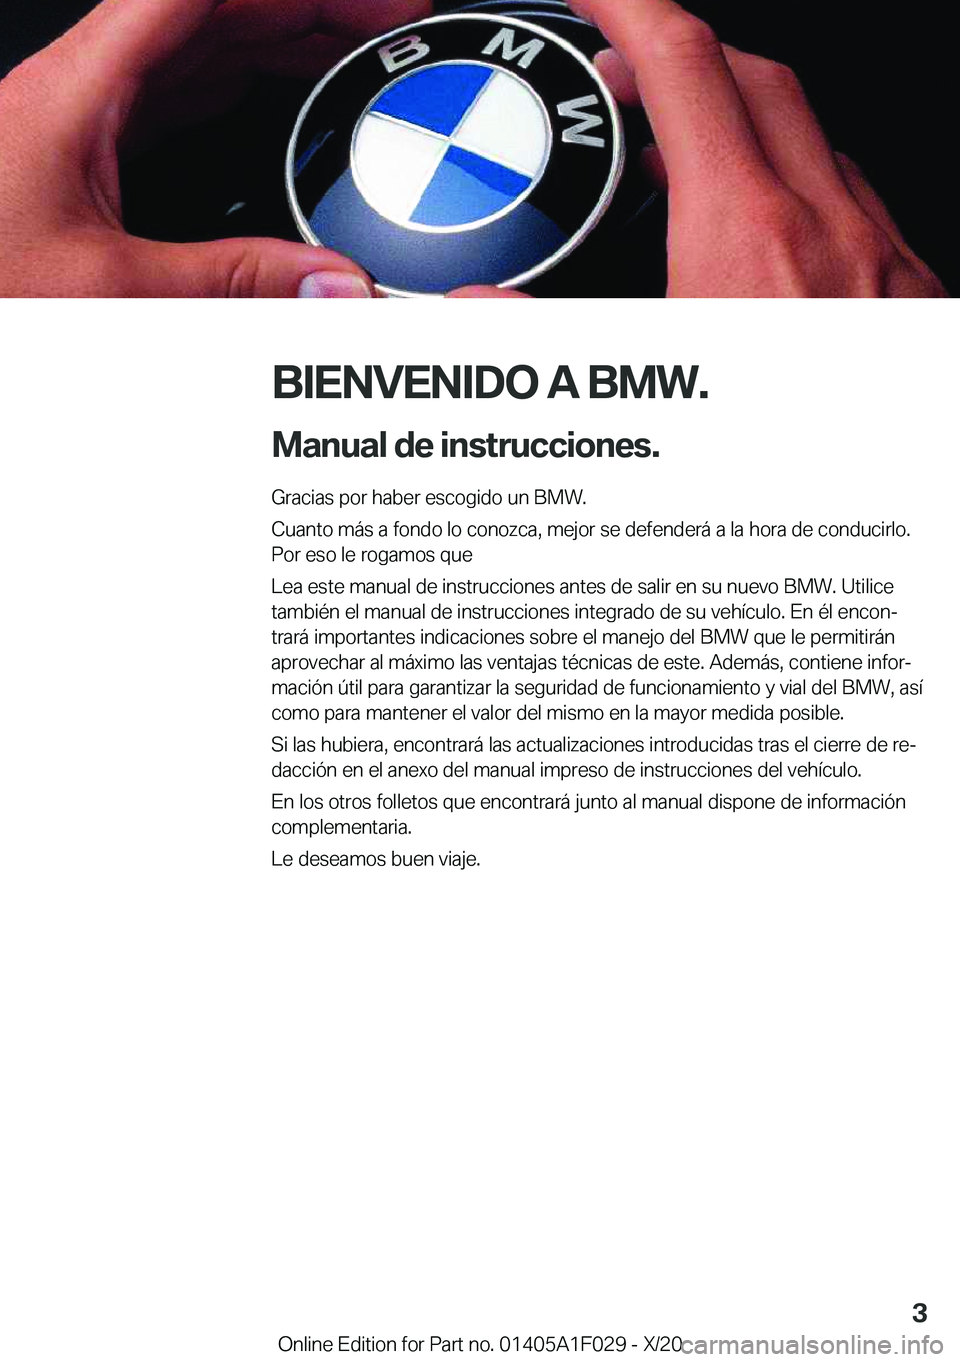 BMW X1 2021  Manuales de Empleo (in Spanish) �B�I�E�N�V�E�N�I�D�O��A��B�M�W�.
�M�a�n�u�a�l��d�e��i�n�s�t�r�u�c�c�i�o�n�e�s�. �G�r�a�c�i�a�s��p�o�r��h�a�b�e�r��e�s�c�o�g�i�d�o��u�n��B�M�W�.
�C�u�a�n�t�o��m�